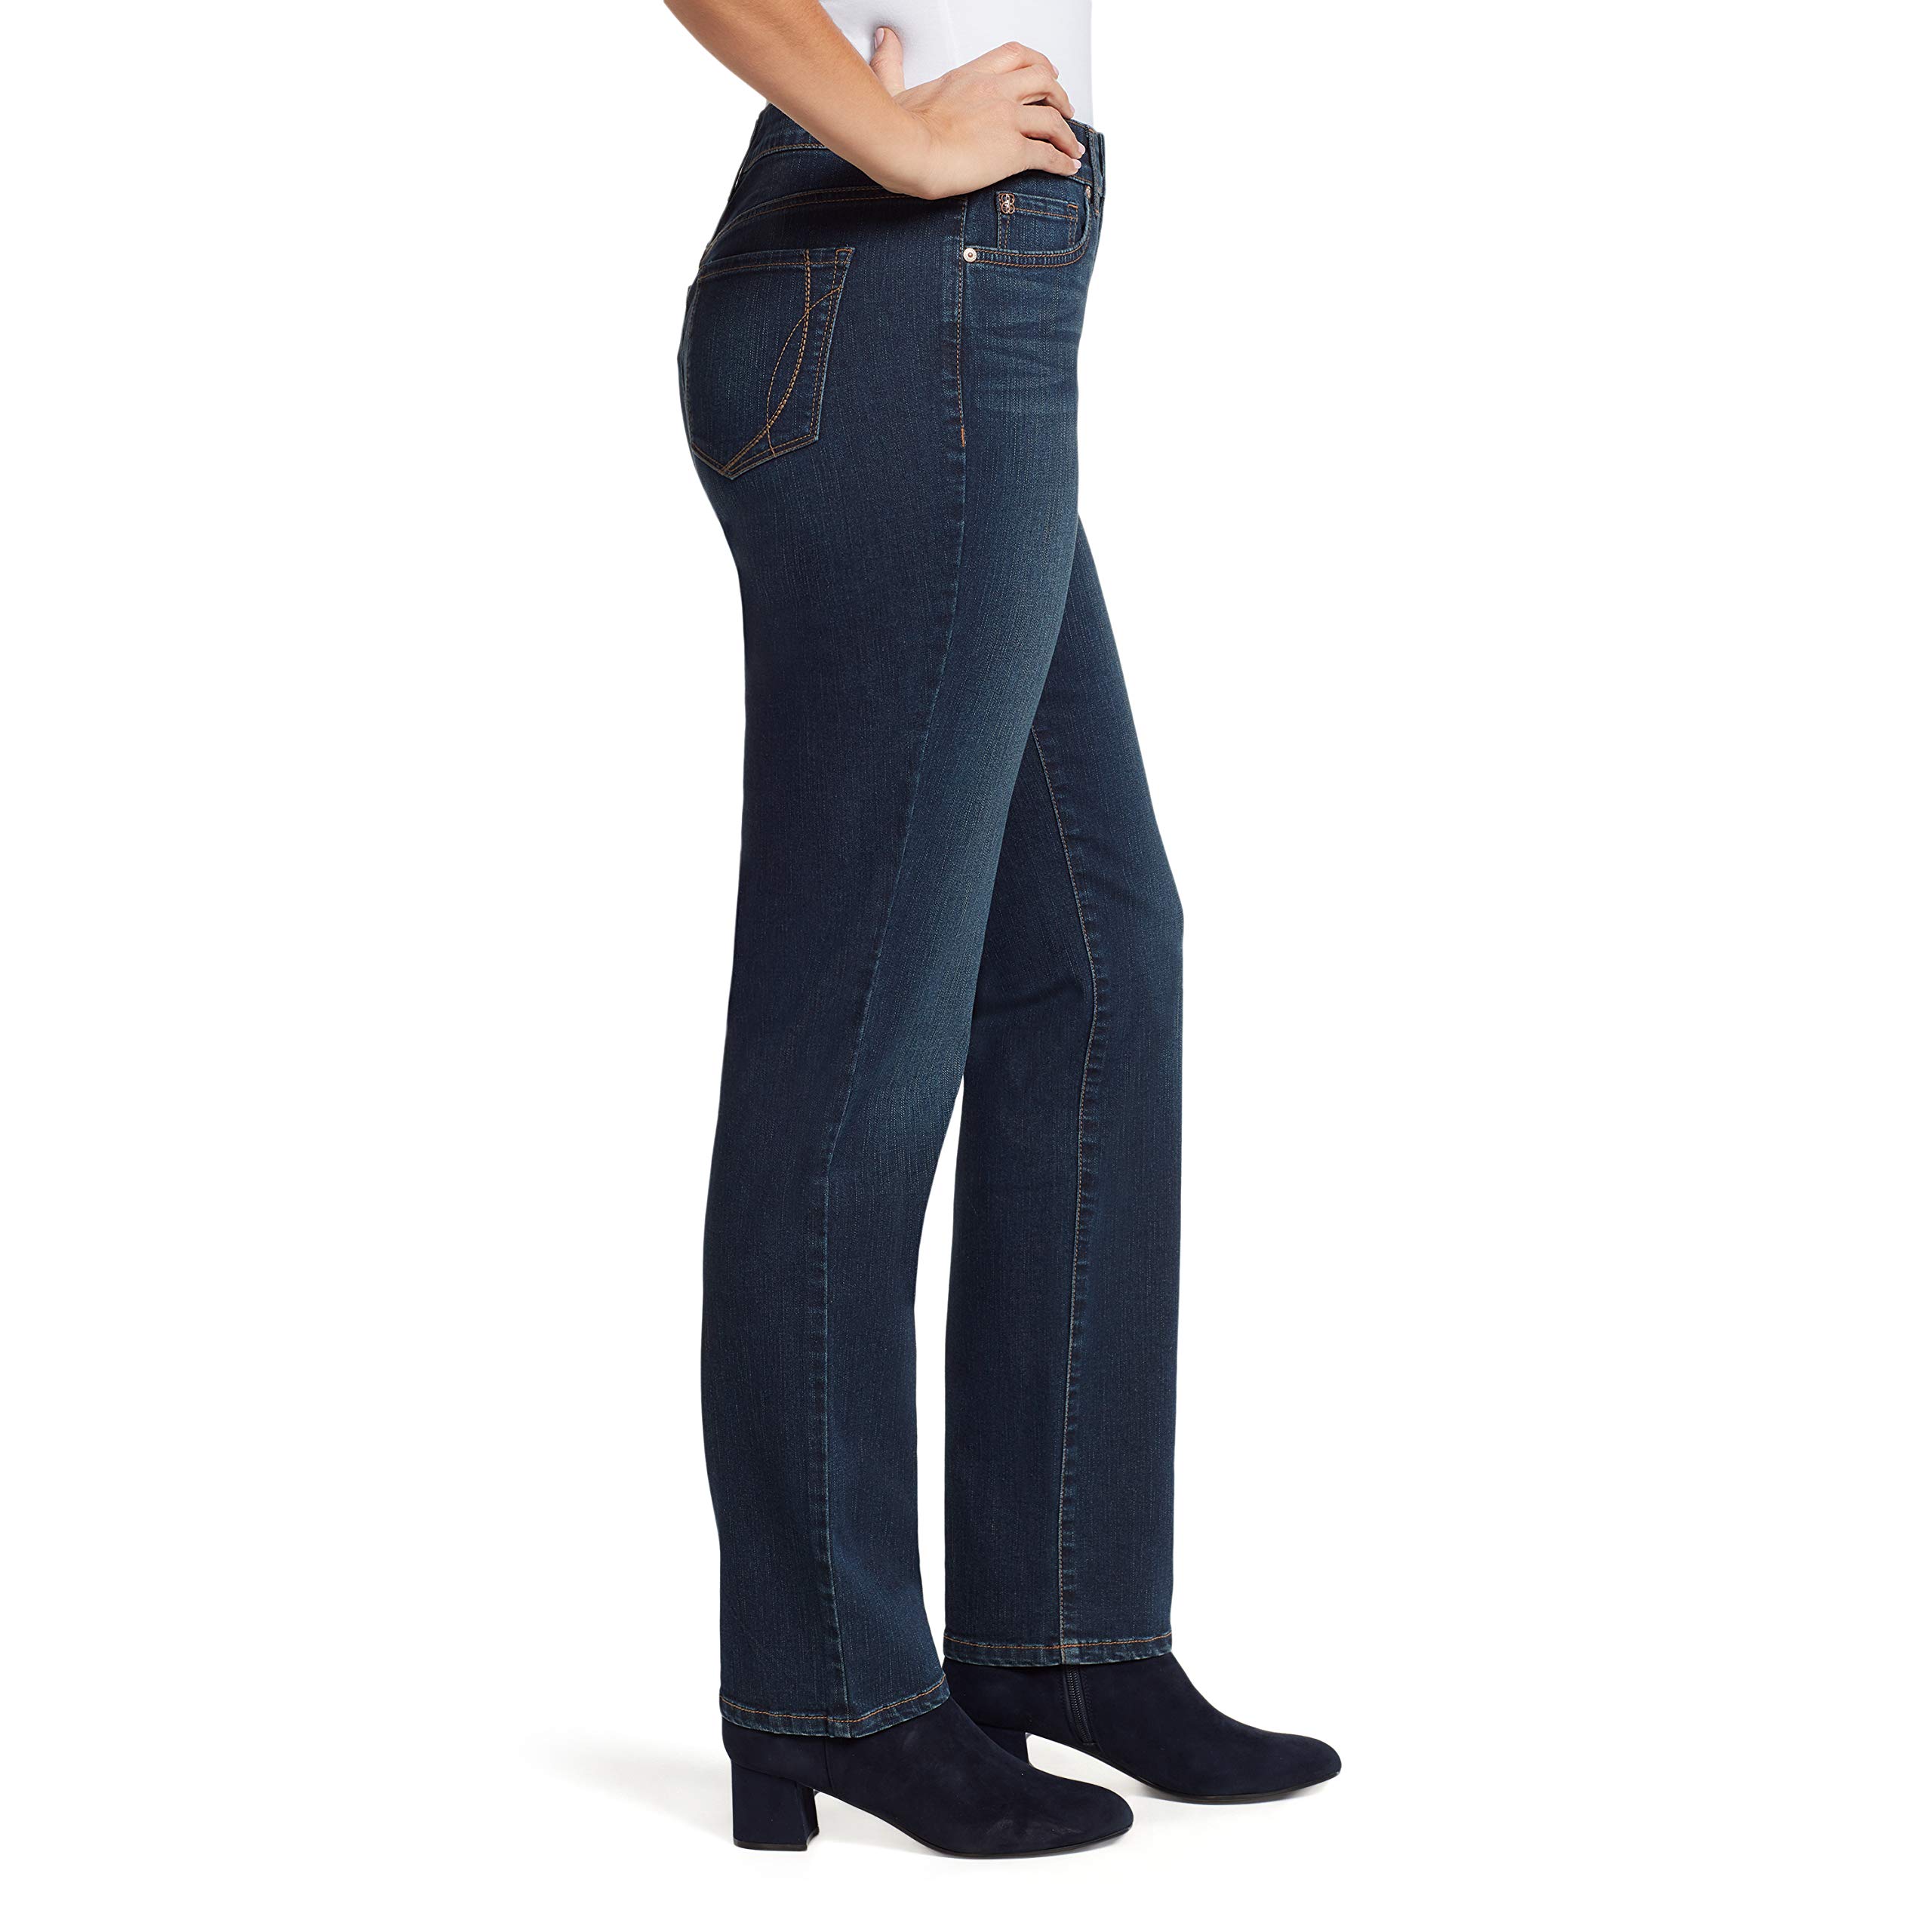 Bandolino Women's Petite Mandie Signature Fit High Rise Straight Jean